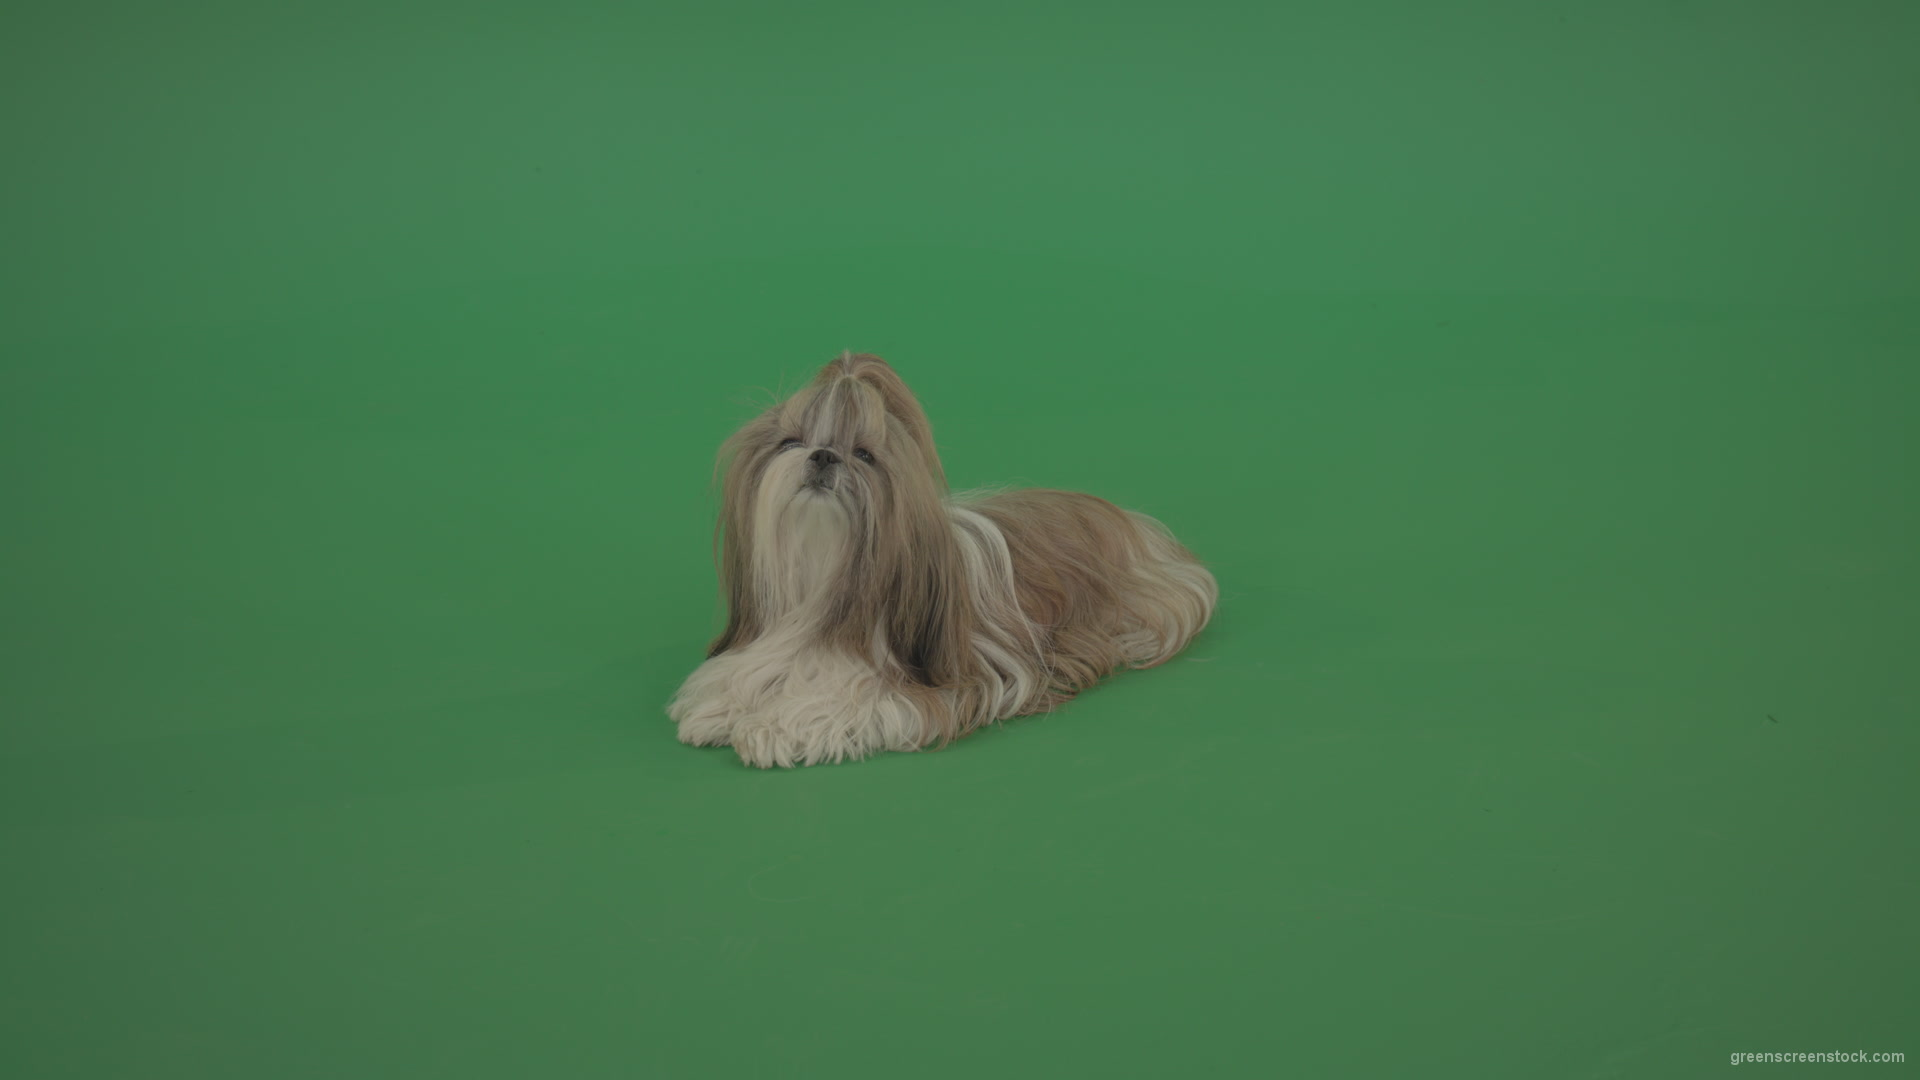 Green-Screen-Animal-Shihtzu-dog-pet-pedigree-with-long-hair-sitting-isolated-on-green-screen_008 Green Screen Stock